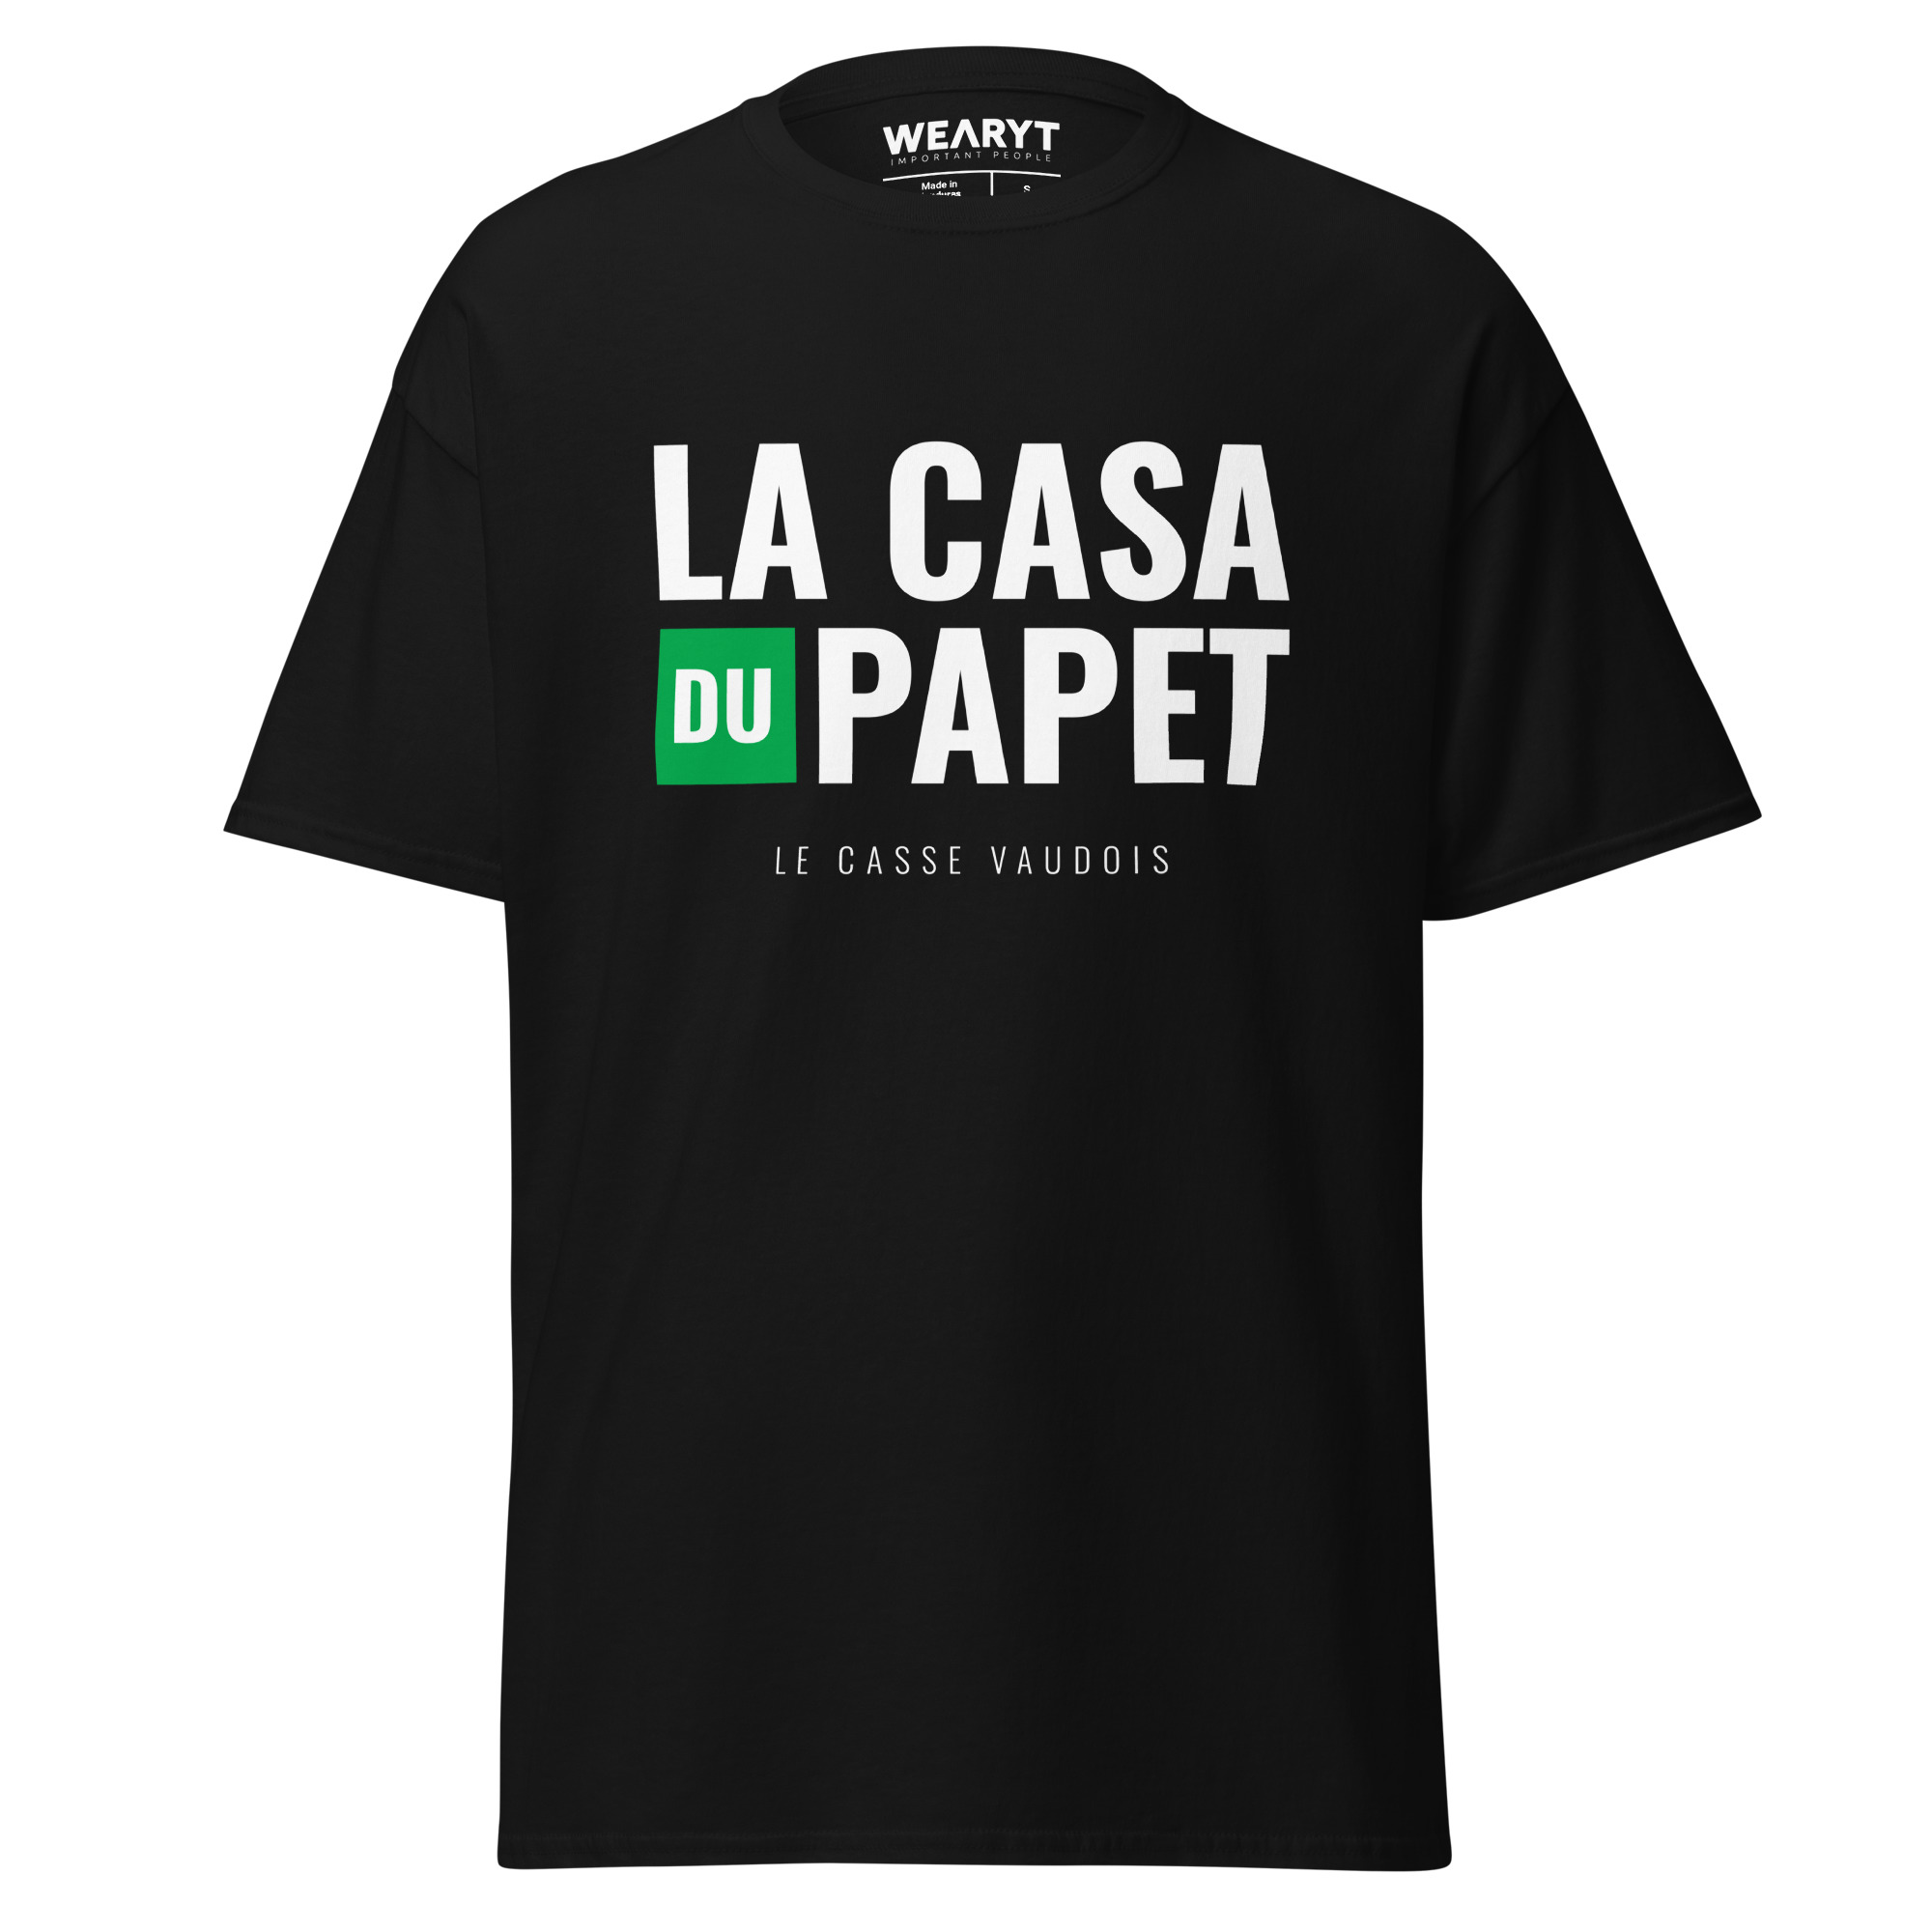 T-shirt – Les Vaudois – Vaudois Bros Prod T-Shirts Wearyt